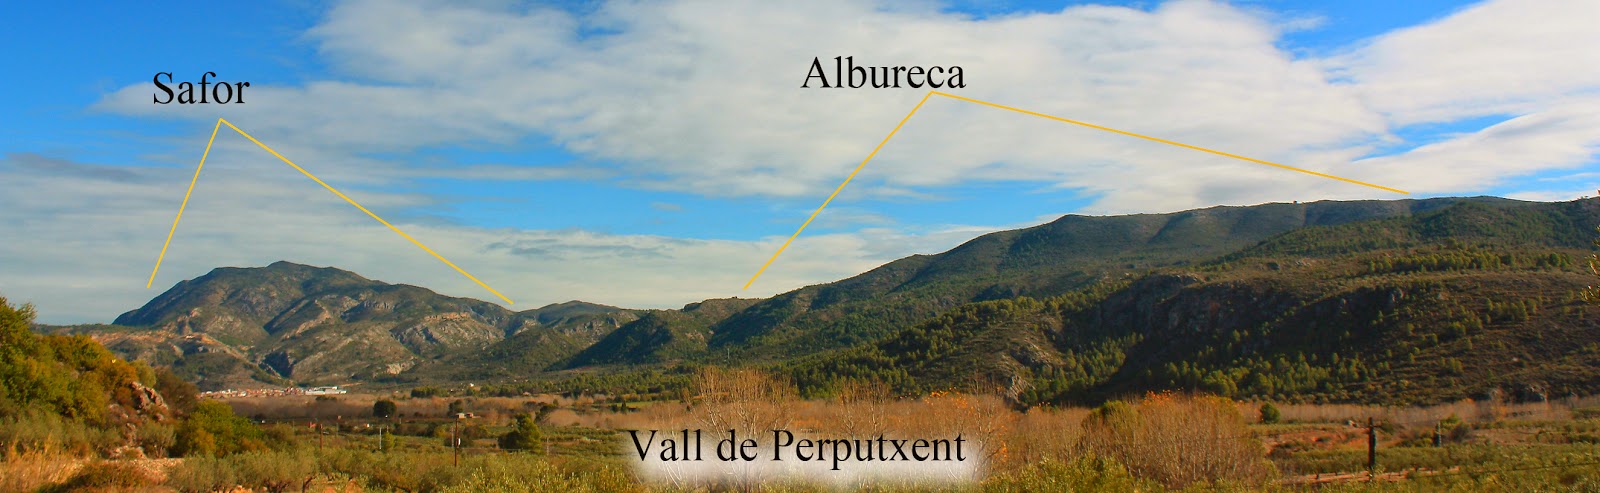 Vall de Perputxent, Safor, Albureca